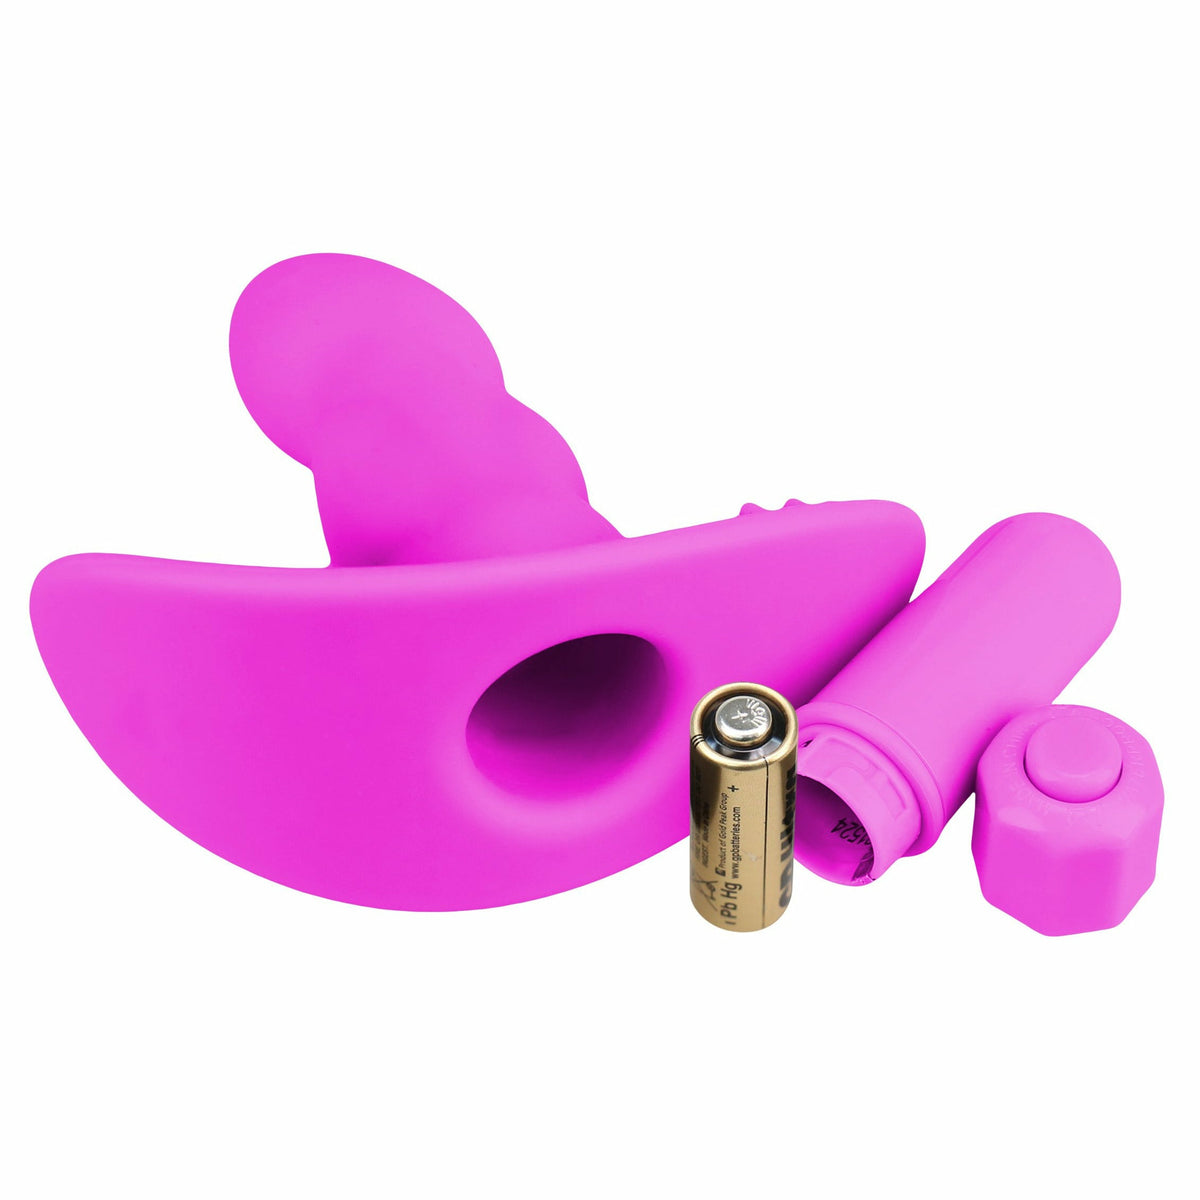 NMC Mystery High - Vibrating Butt Plug - Pink